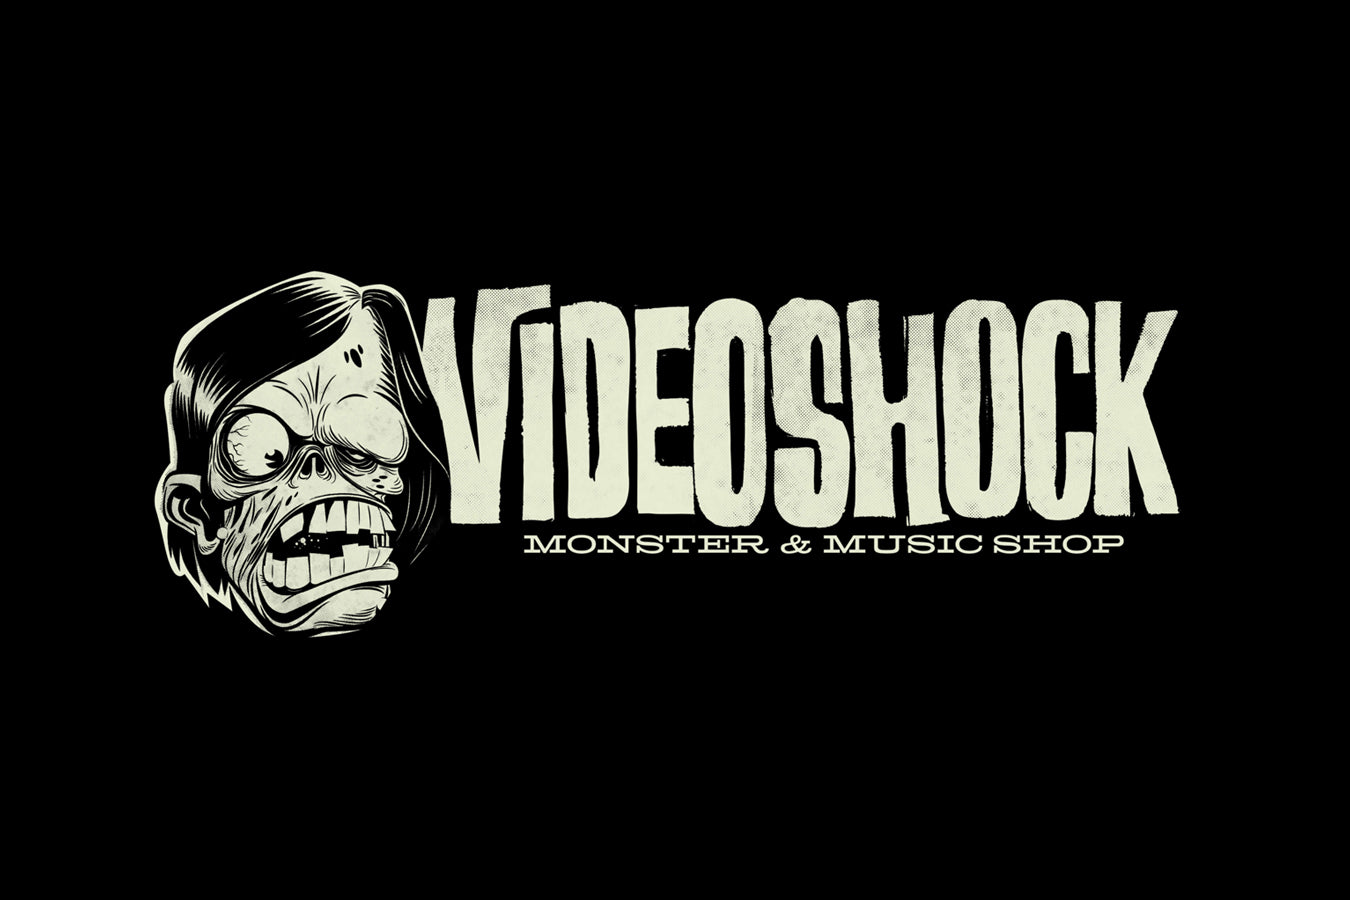 Video Shock Banner